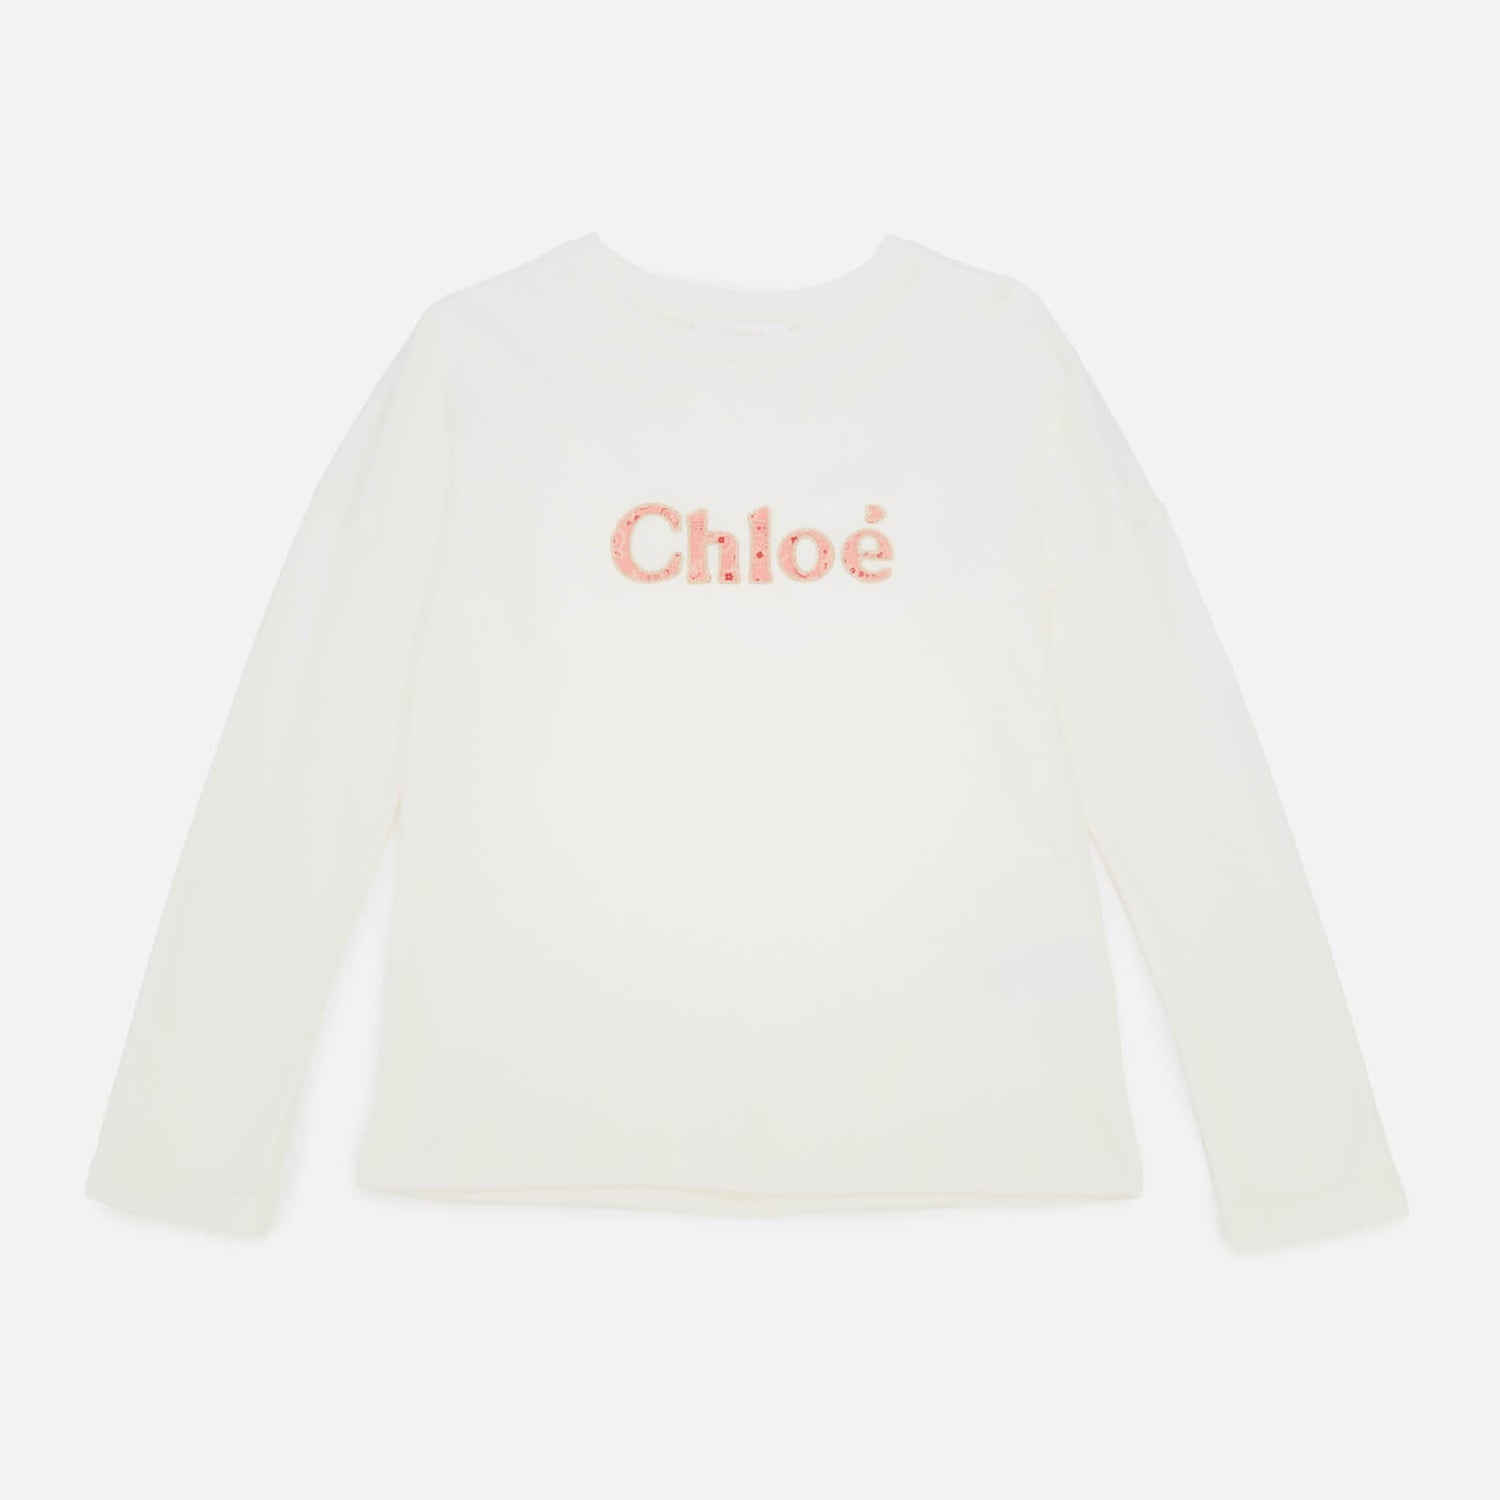 Chloé Girls Long Sleeve T-Shirt - Offwhite - 2 Years